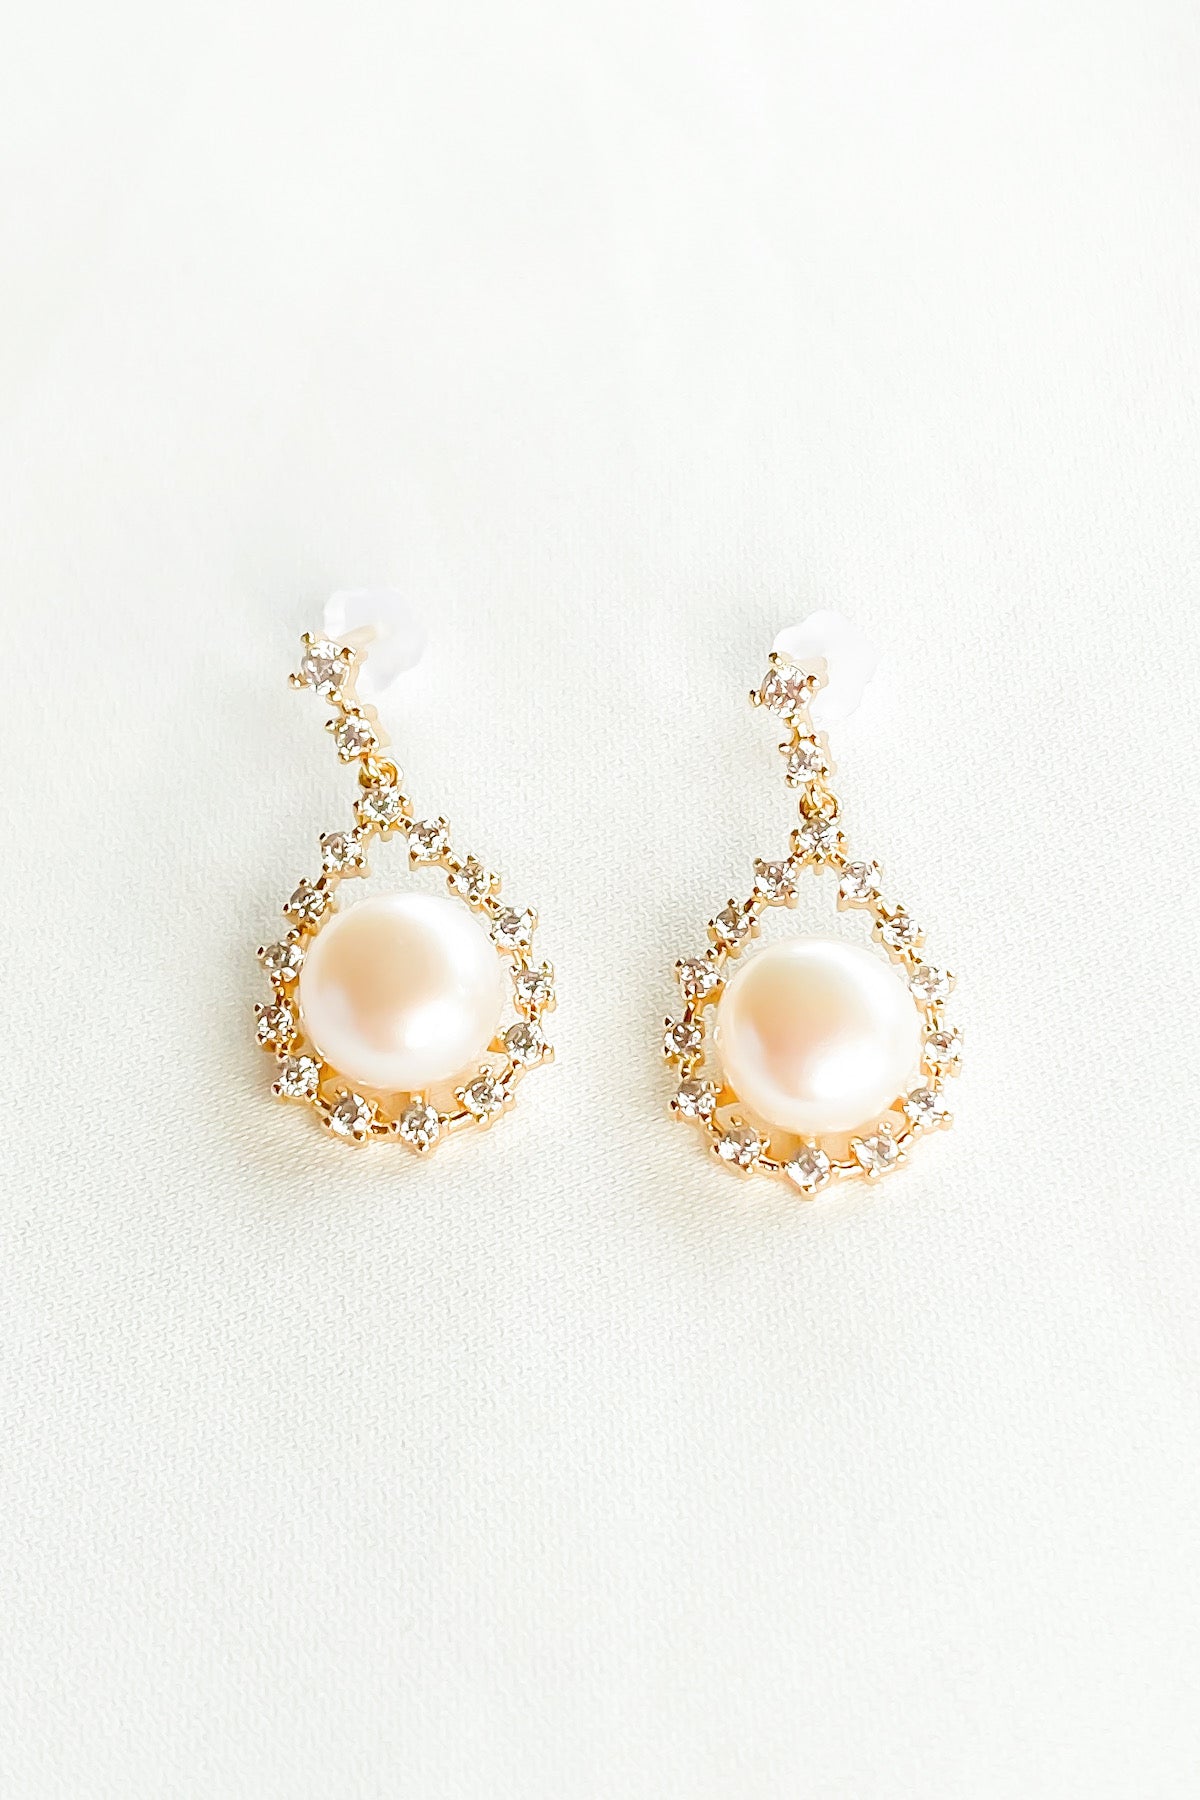 SKYE San Francisco Shop SF Chic Modern Elegant Classy Women Jewelry French Parisian Minimalist Amie 18K Gold Freshwater Pearl Crystal Earrings 3